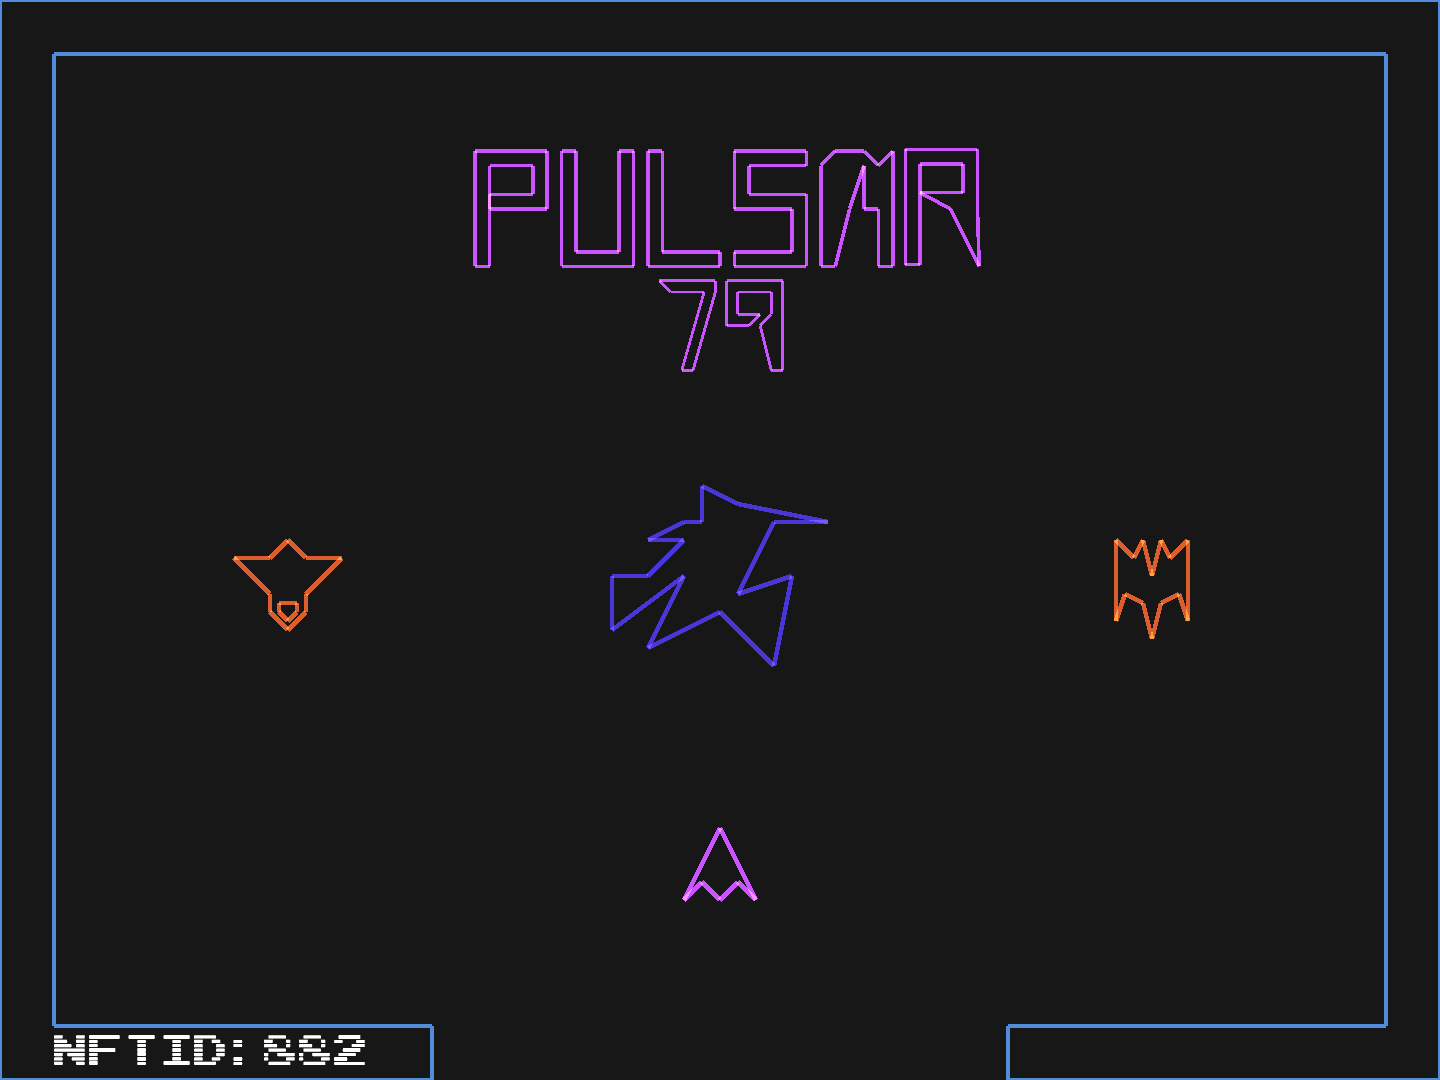 Pulsar79